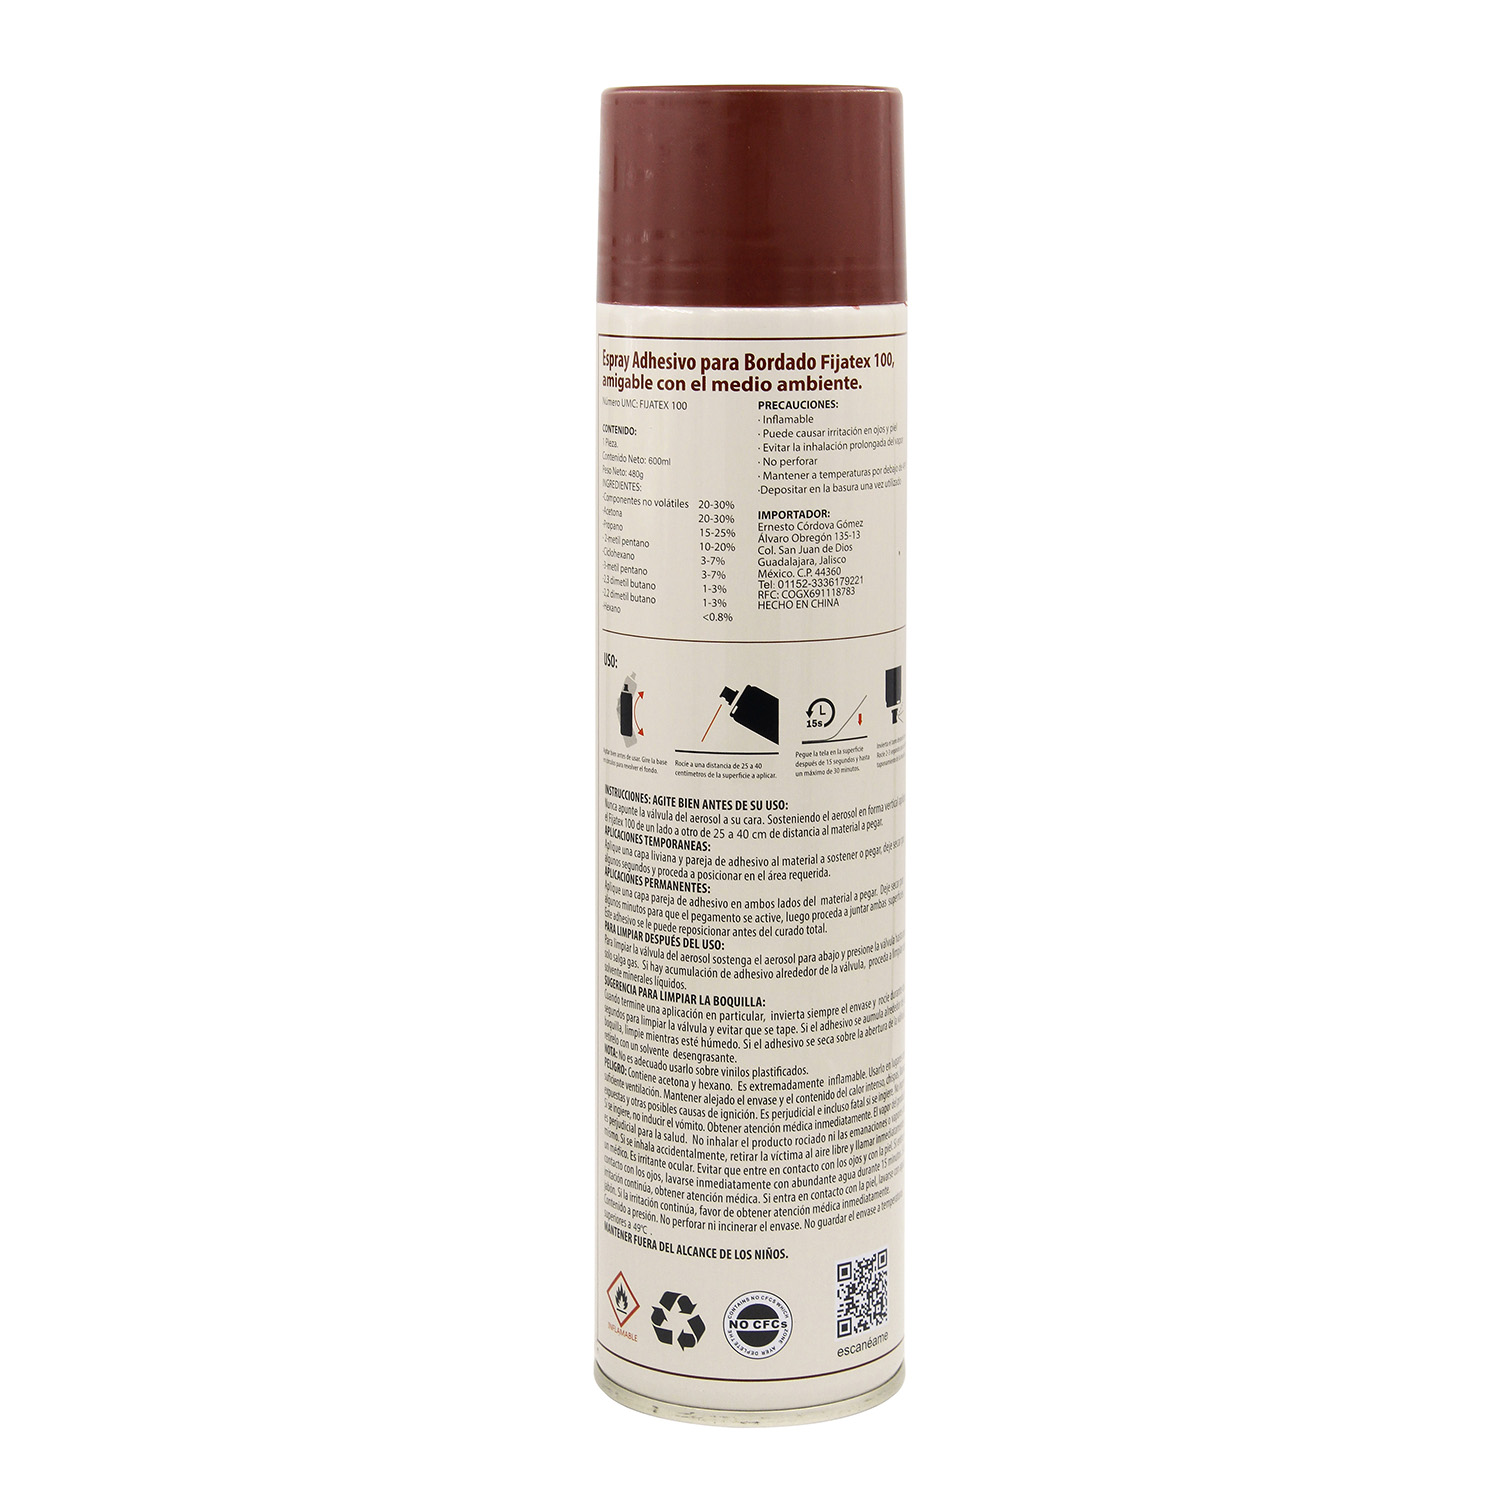 Fijatex 96 Spray Adhesivo – Hilos Modiz